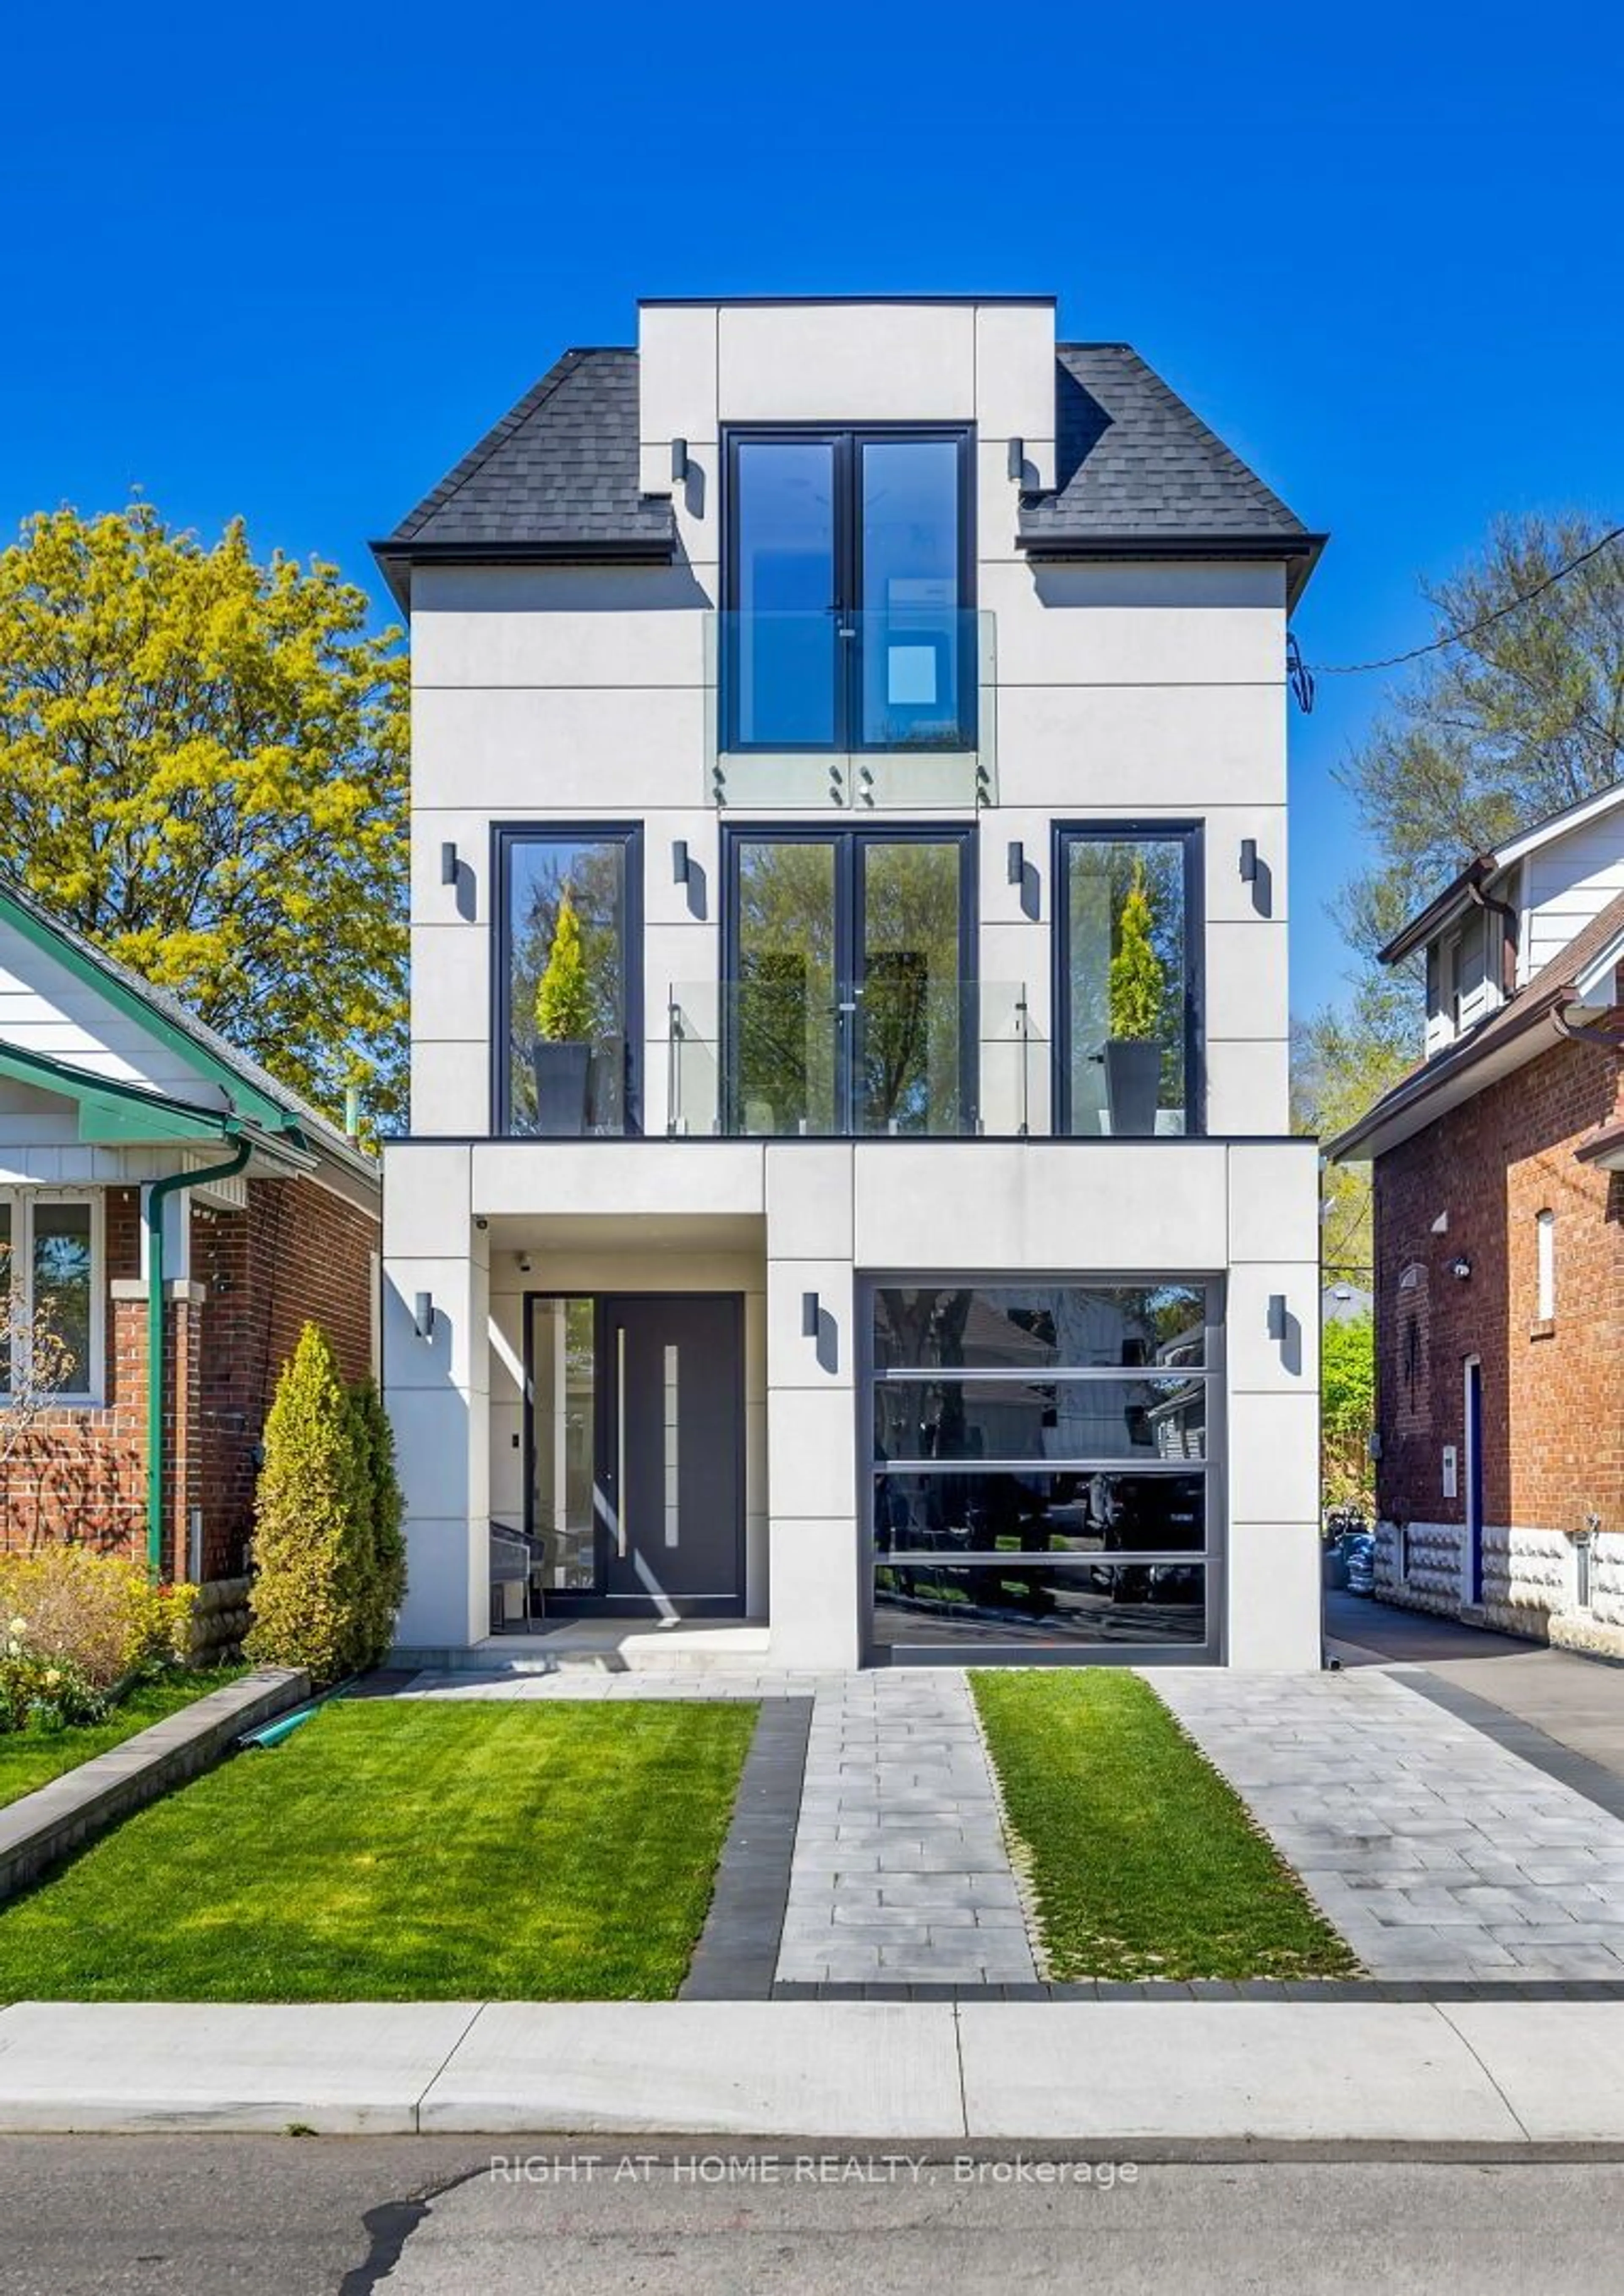 Home with brick exterior material for 40 Sixth St, Toronto Ontario M8V 3A2